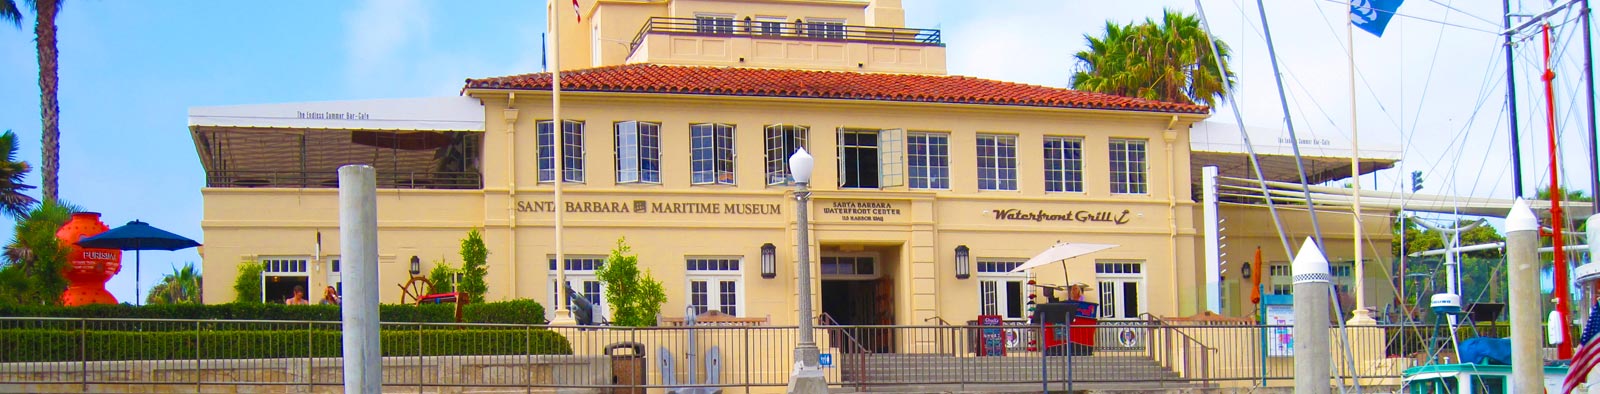 Santa Barbara Maritime Museum - External View